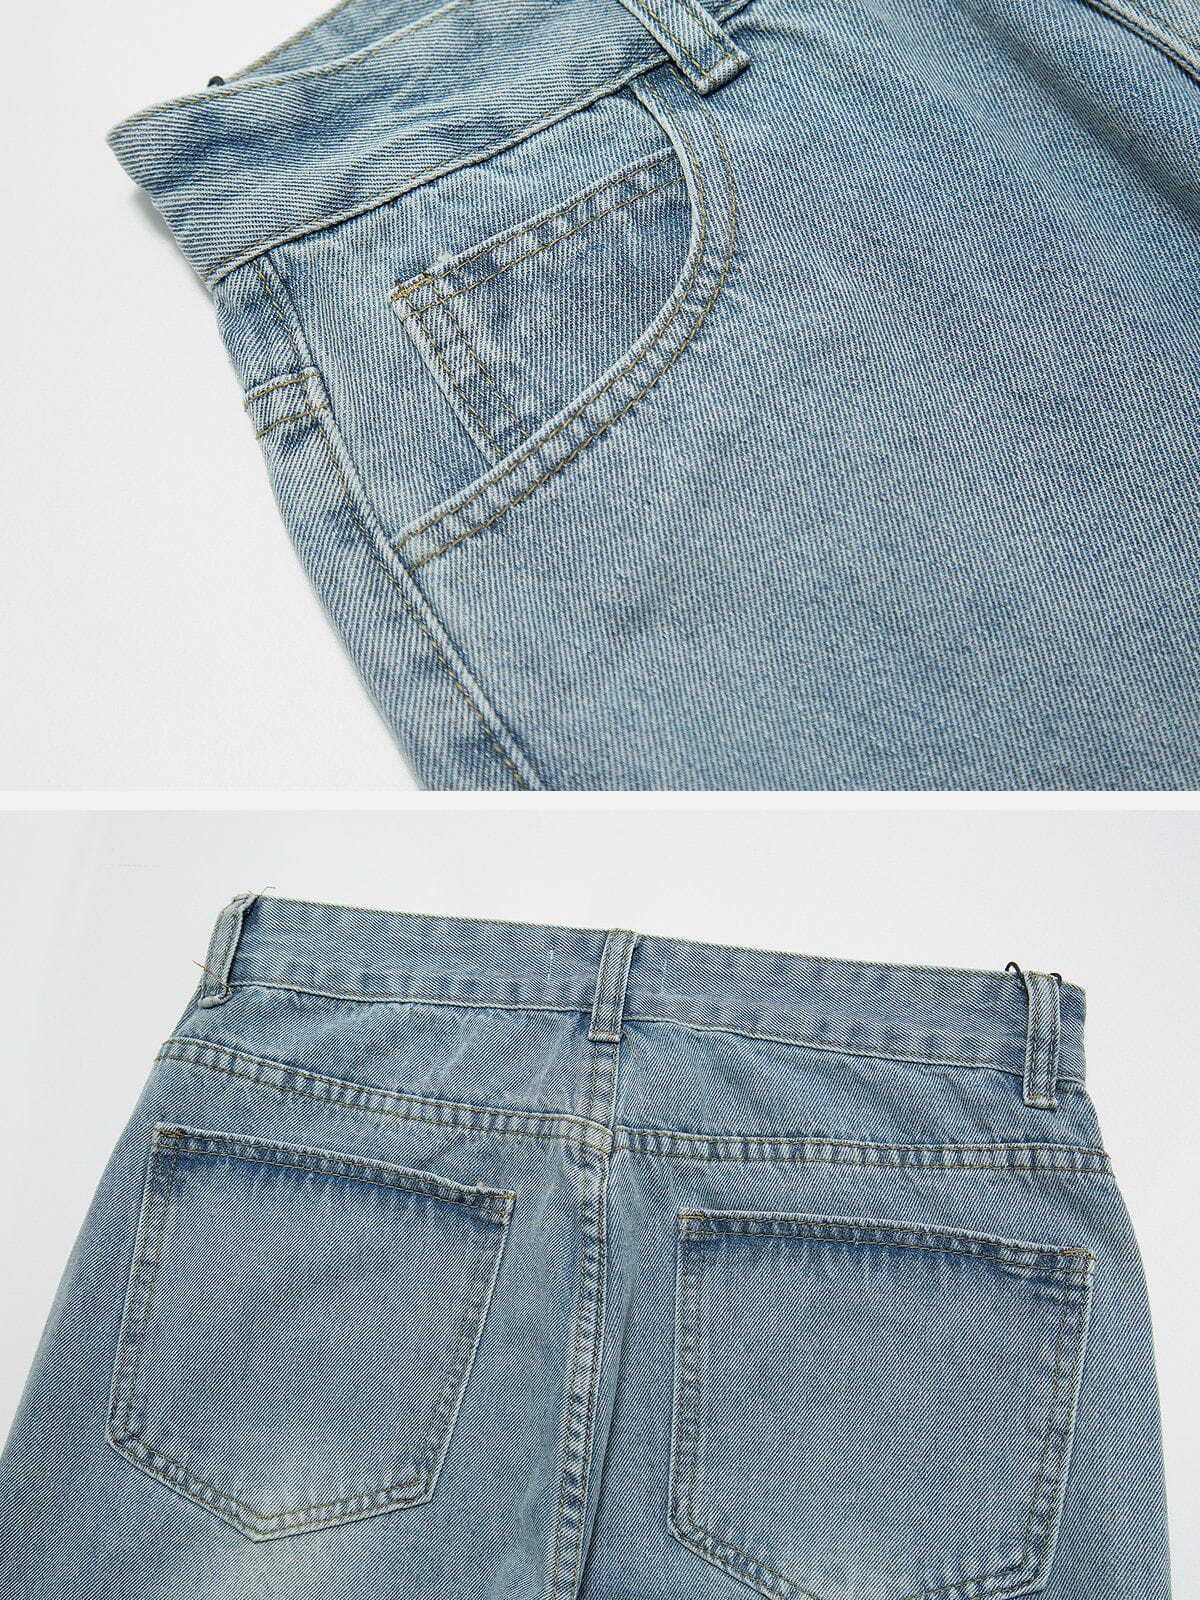 retro wash zip jeans adjustable fit & vintage vibes 3367